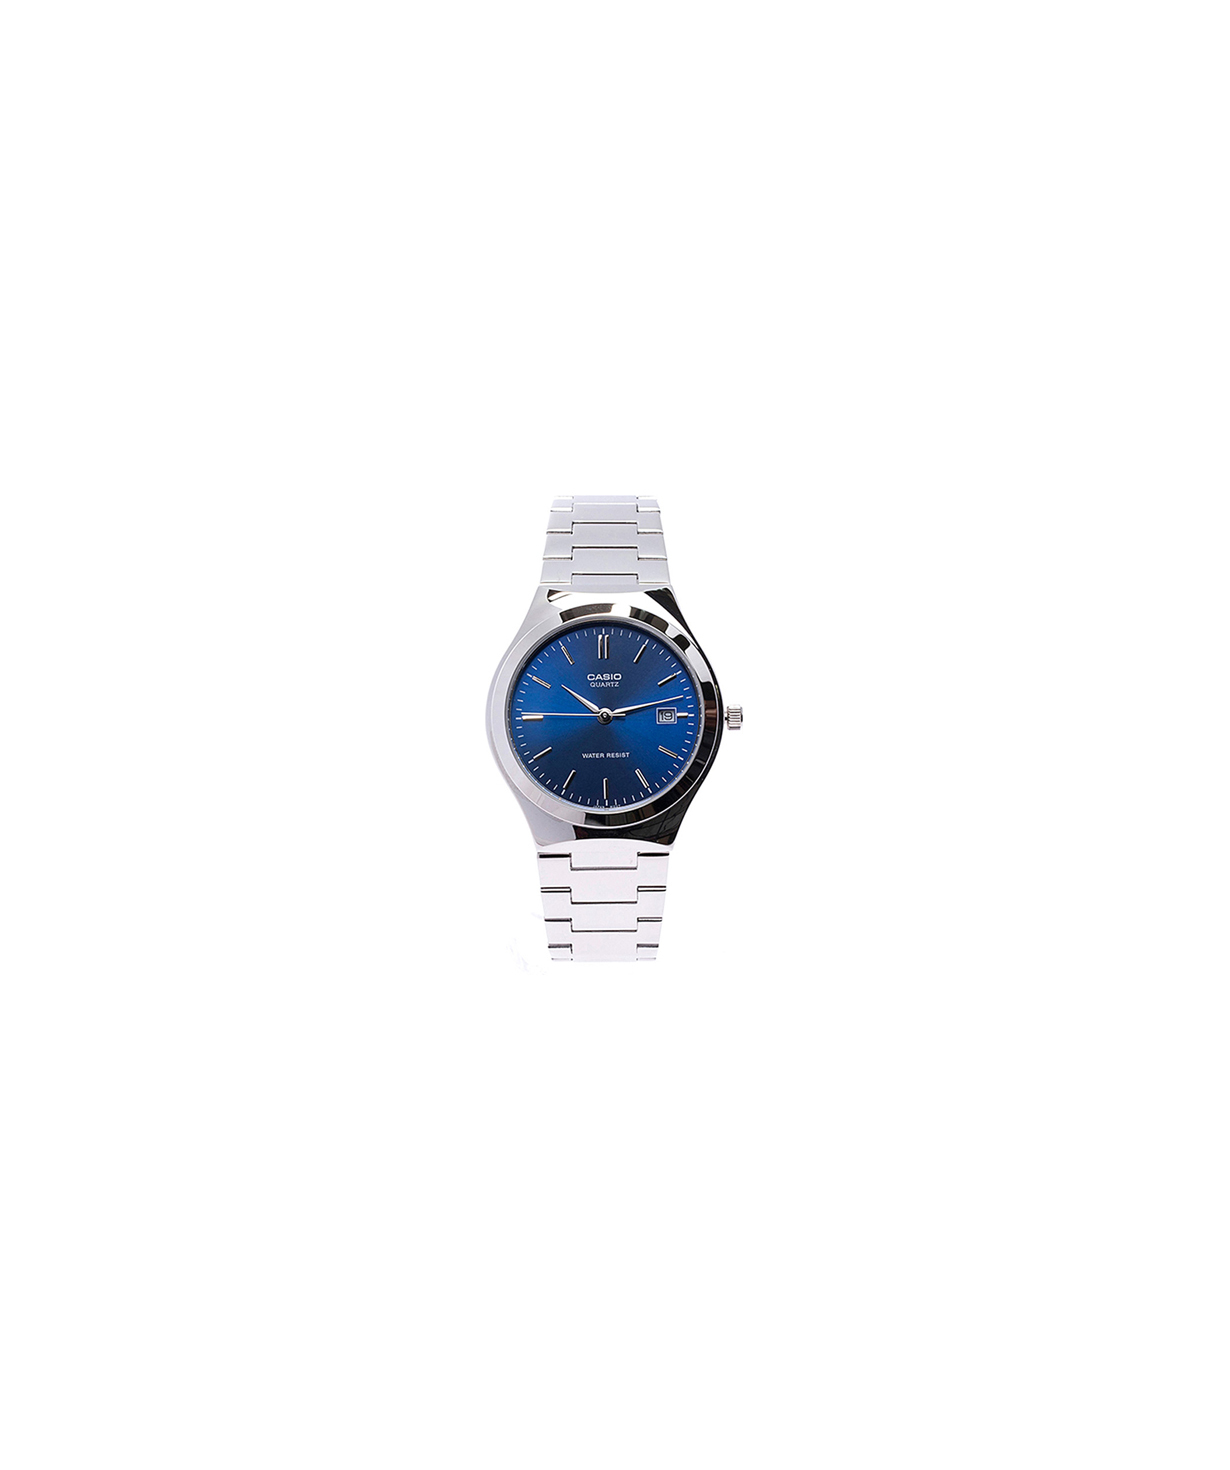 Ժամացույց  «Casio» ձեռքի  LTP-1170A-2ARDF